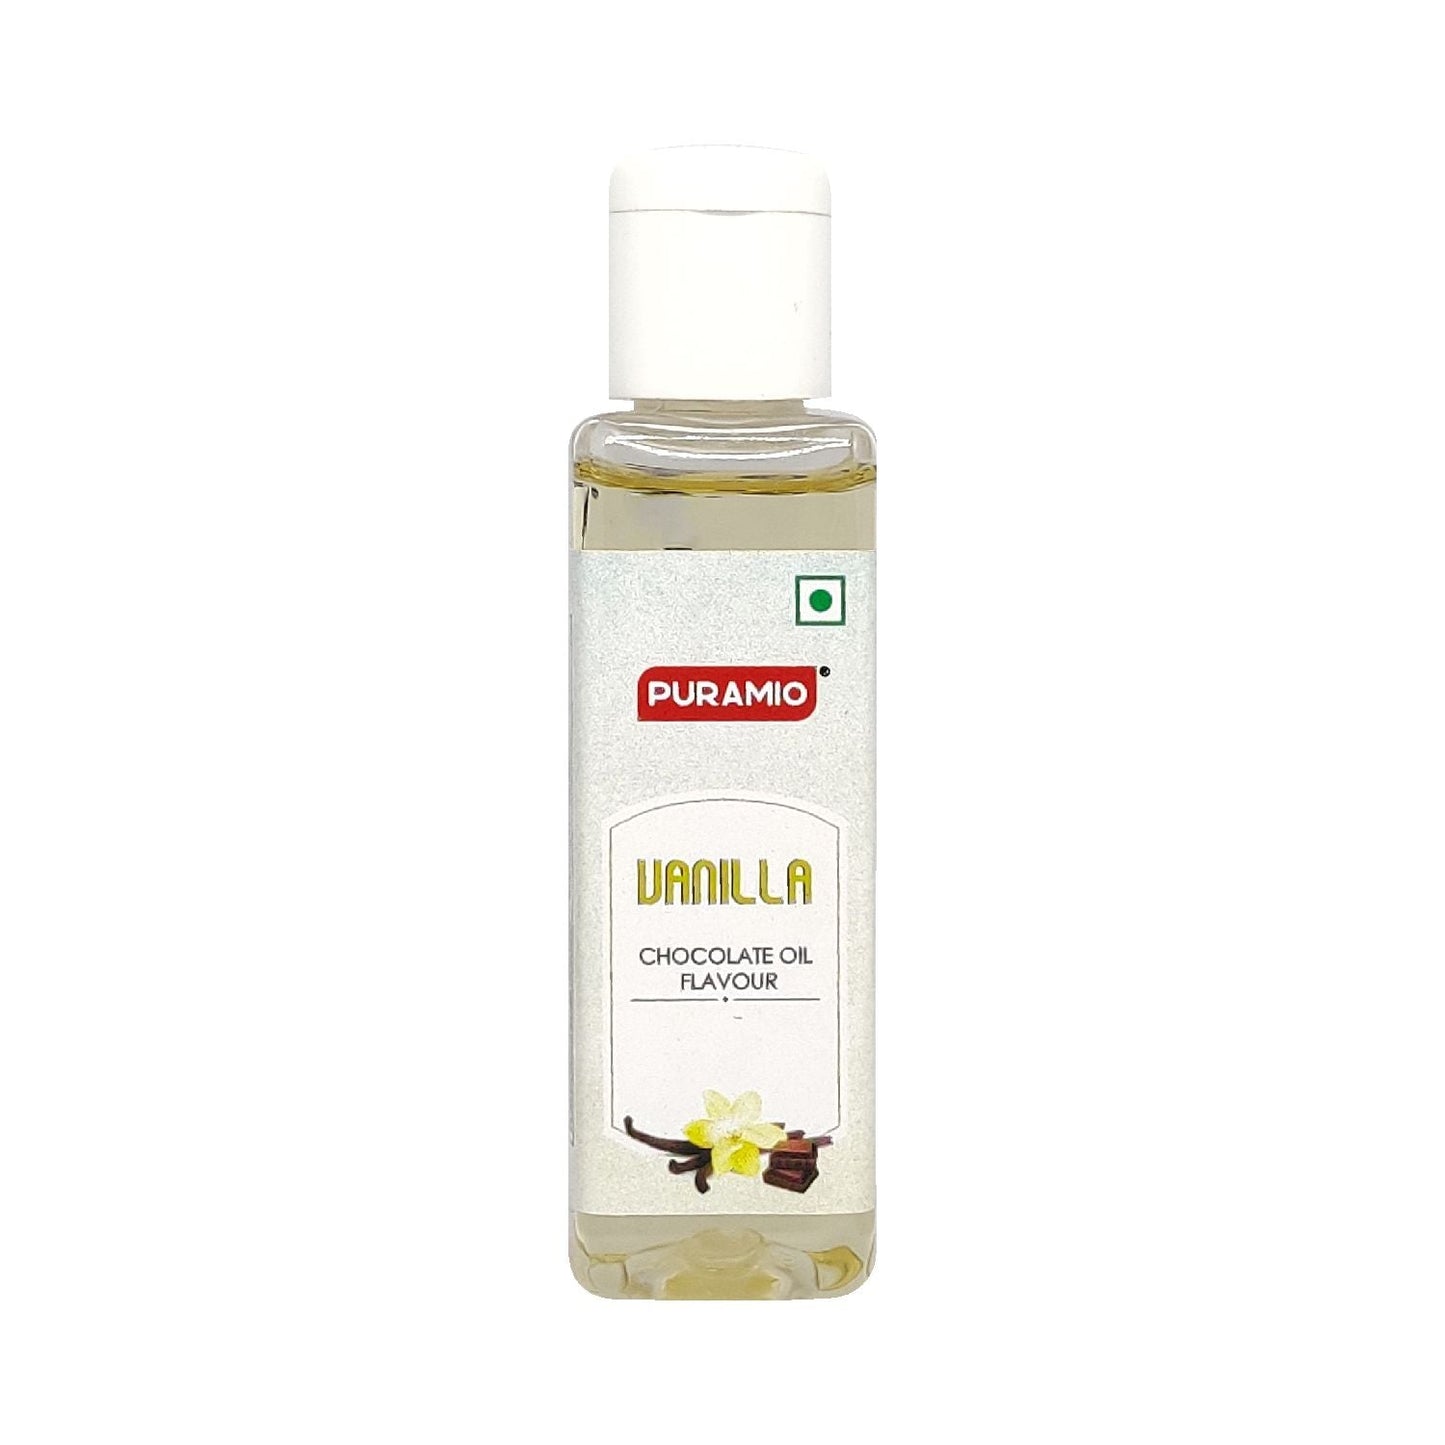 Puramio Chocolate Oil Flavour - Vanilla